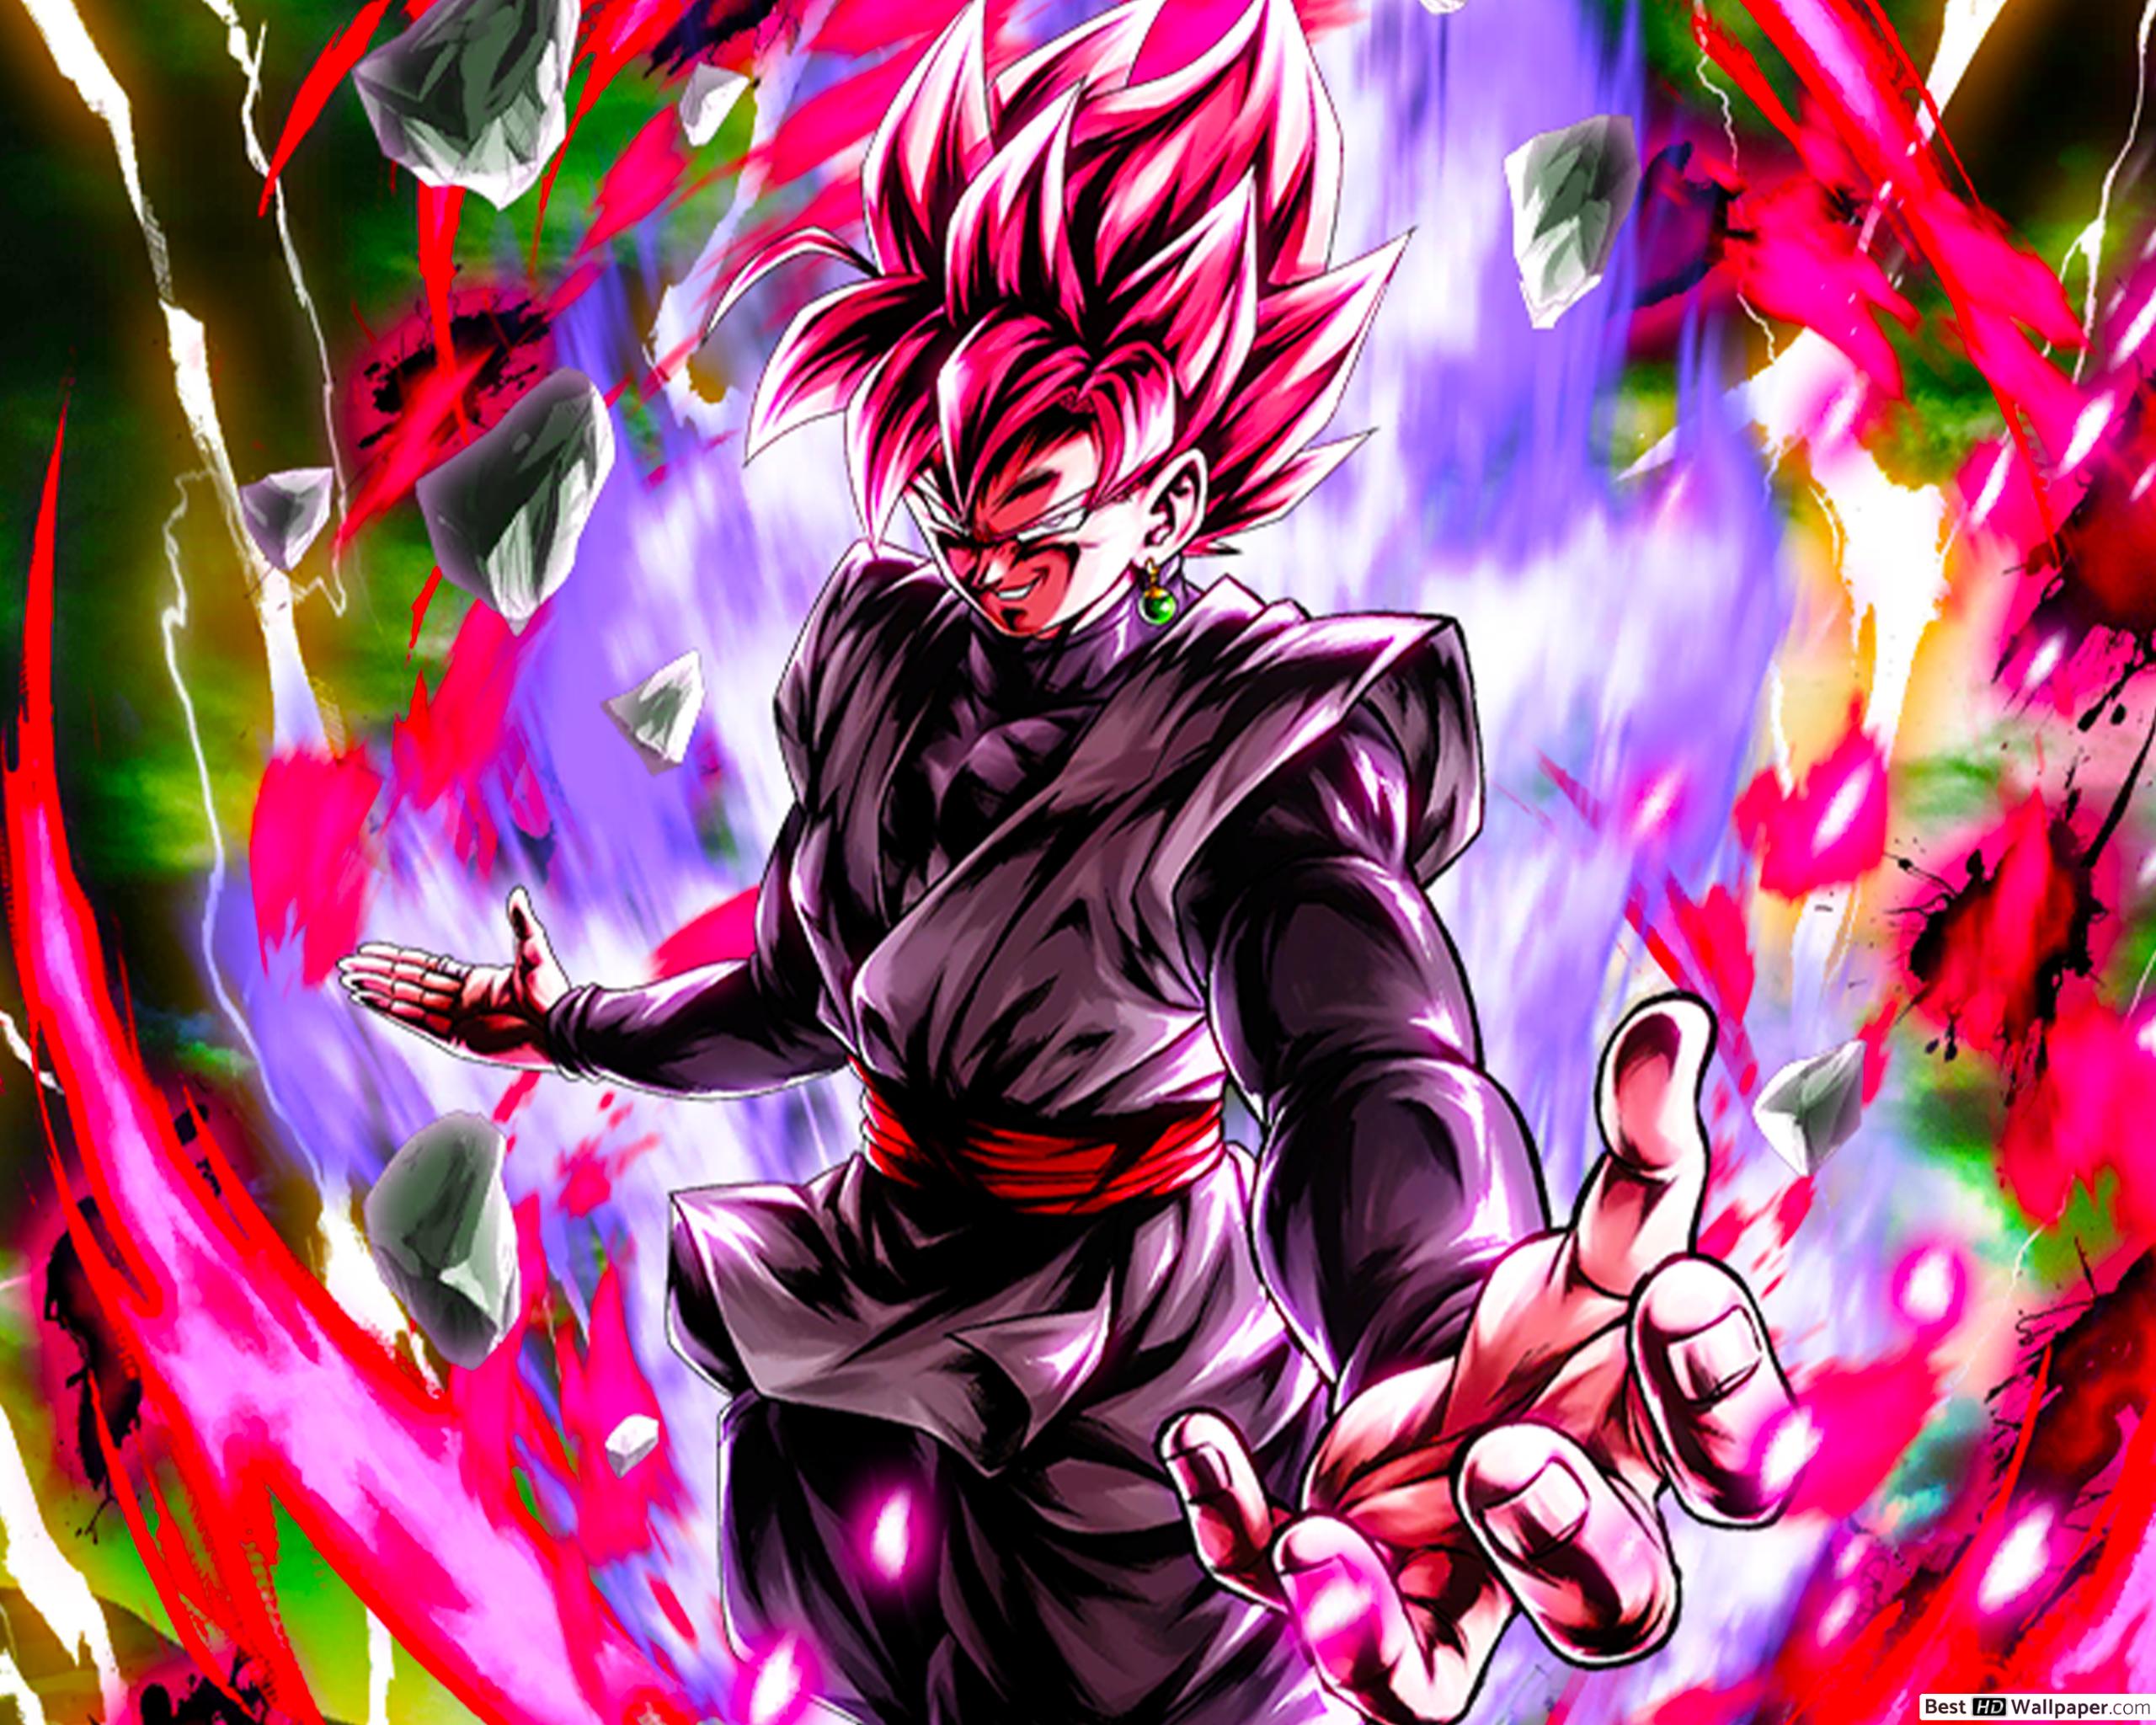 Super Saiyan Rose / Goku Black from Dragon Ball Super [Dragon Ball Legends Arts] for Desktop HD wallpaper download